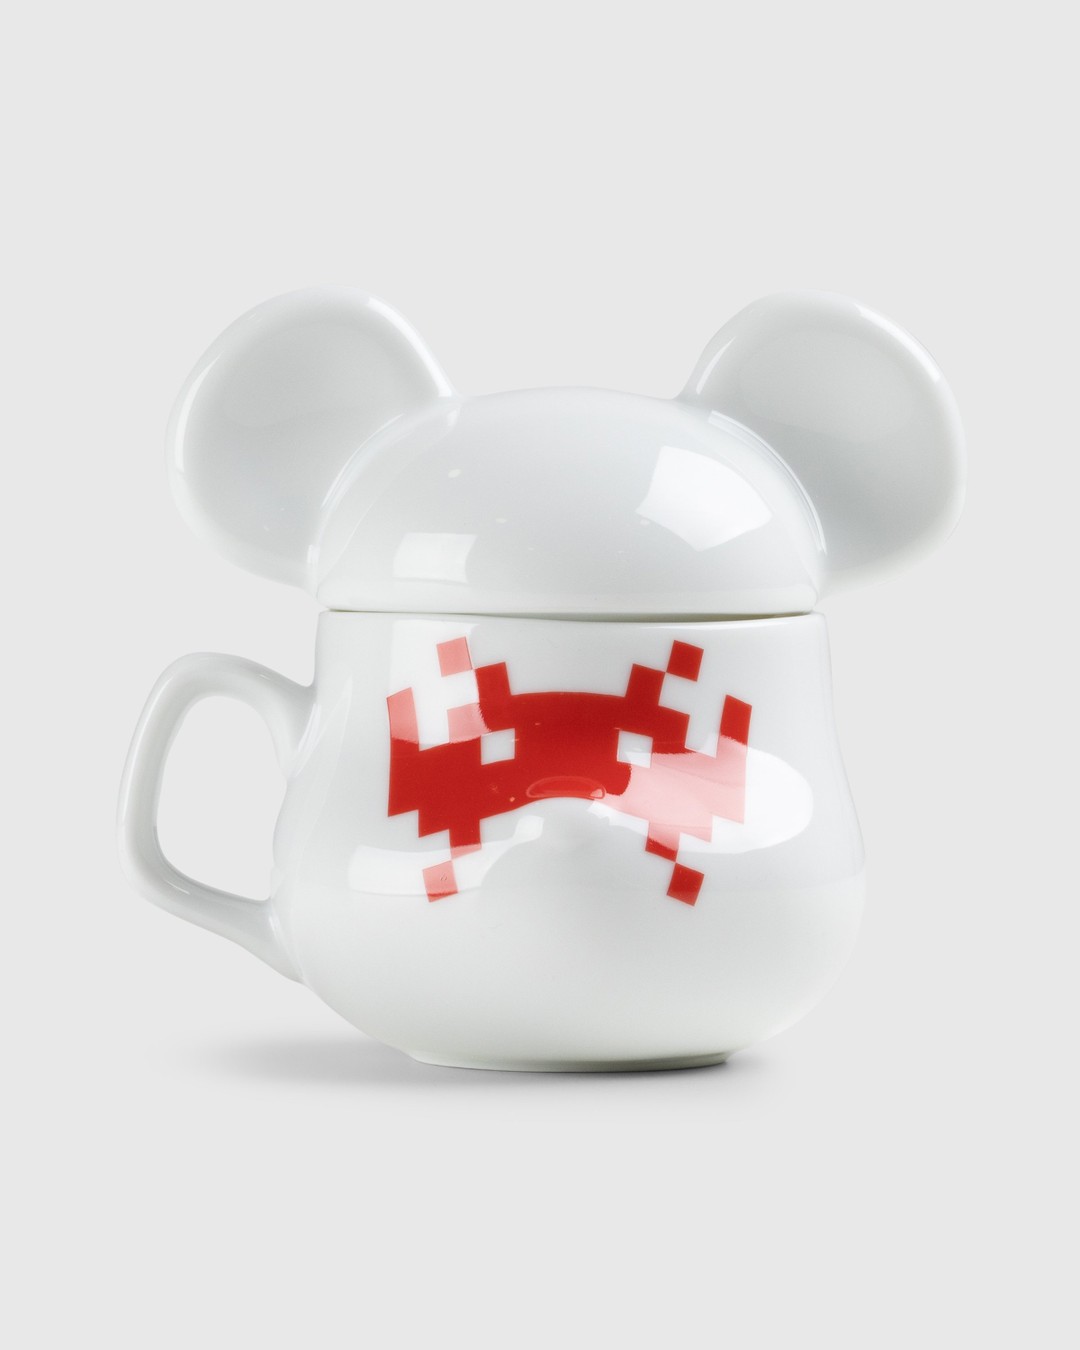 Medicom – Space Invaders Be@rmug White/Red - Ceramics - Multi - Image 1